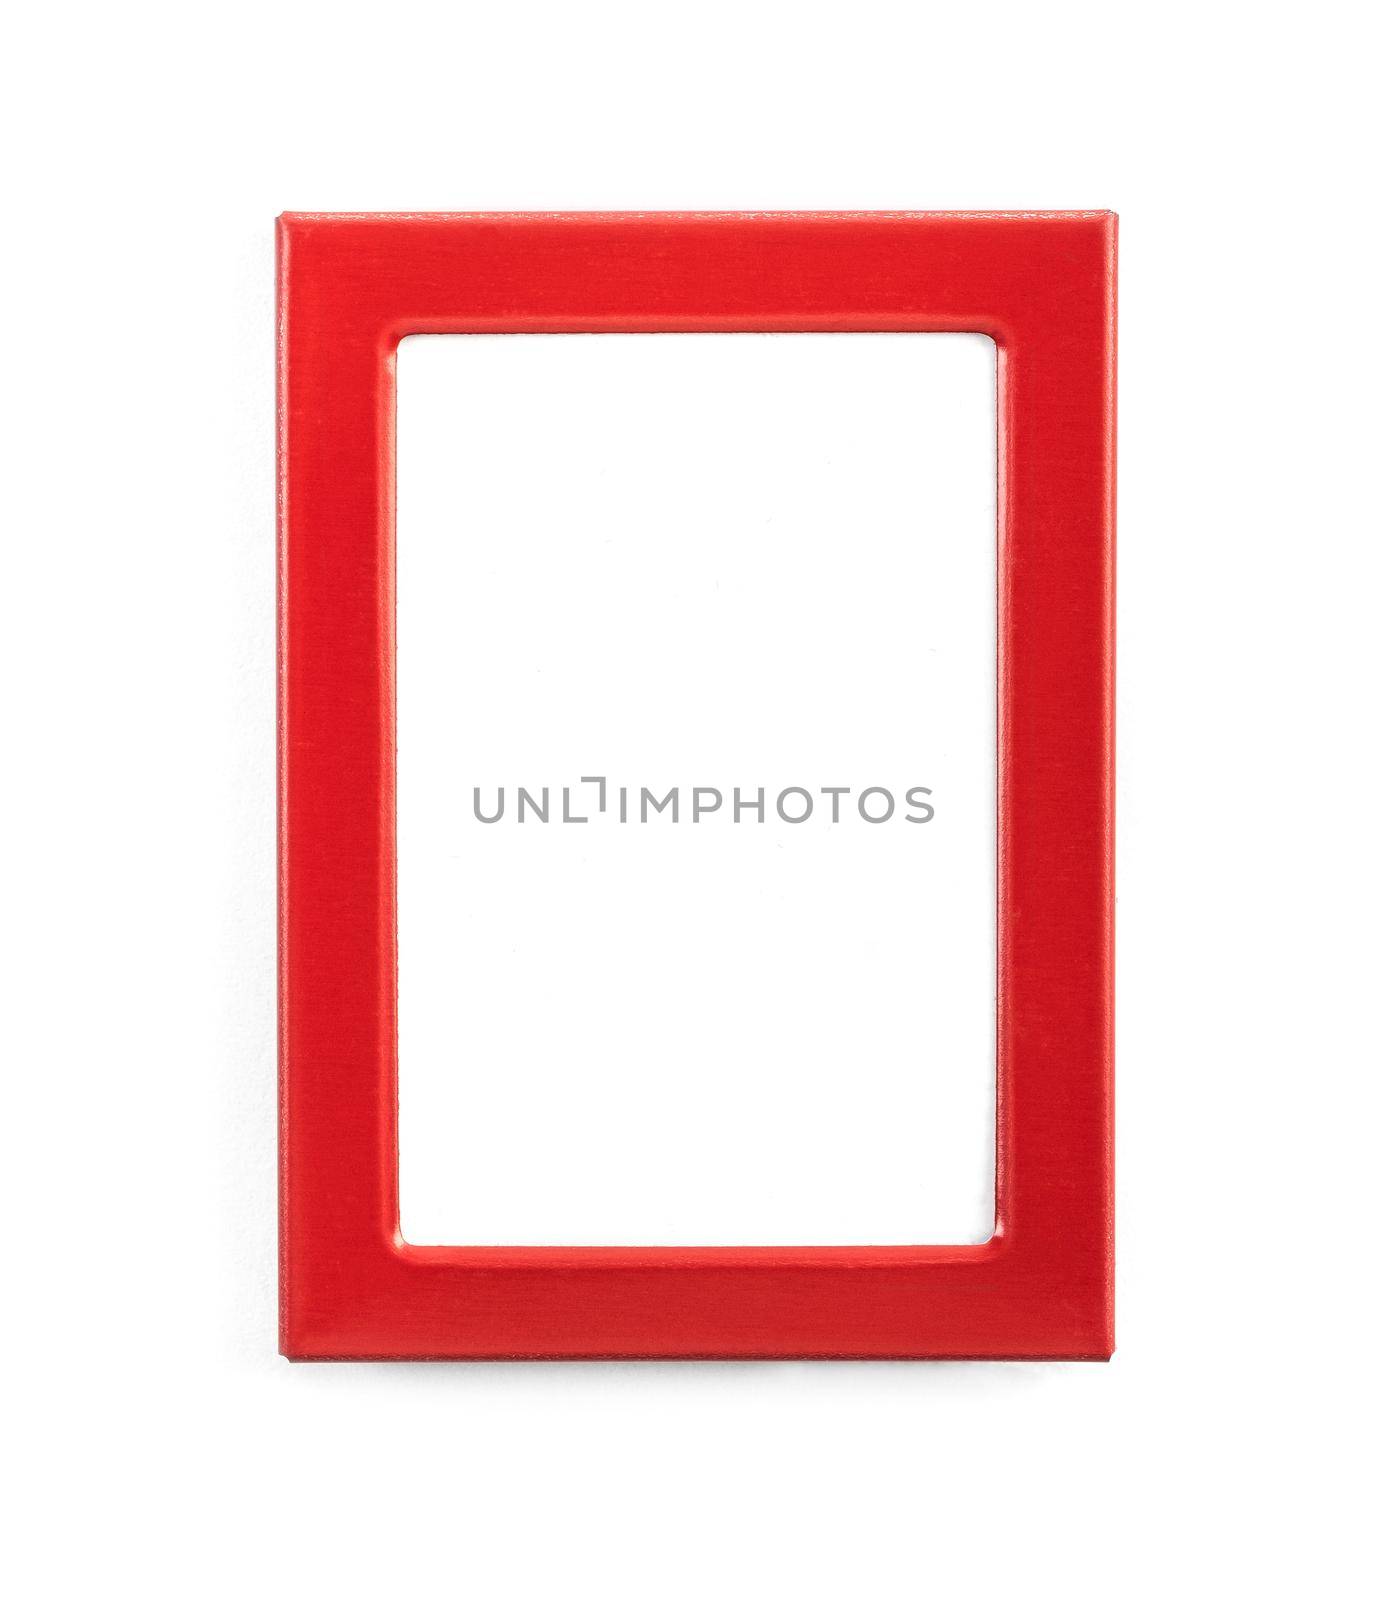 Empty red rectanglular frame isolated on white background